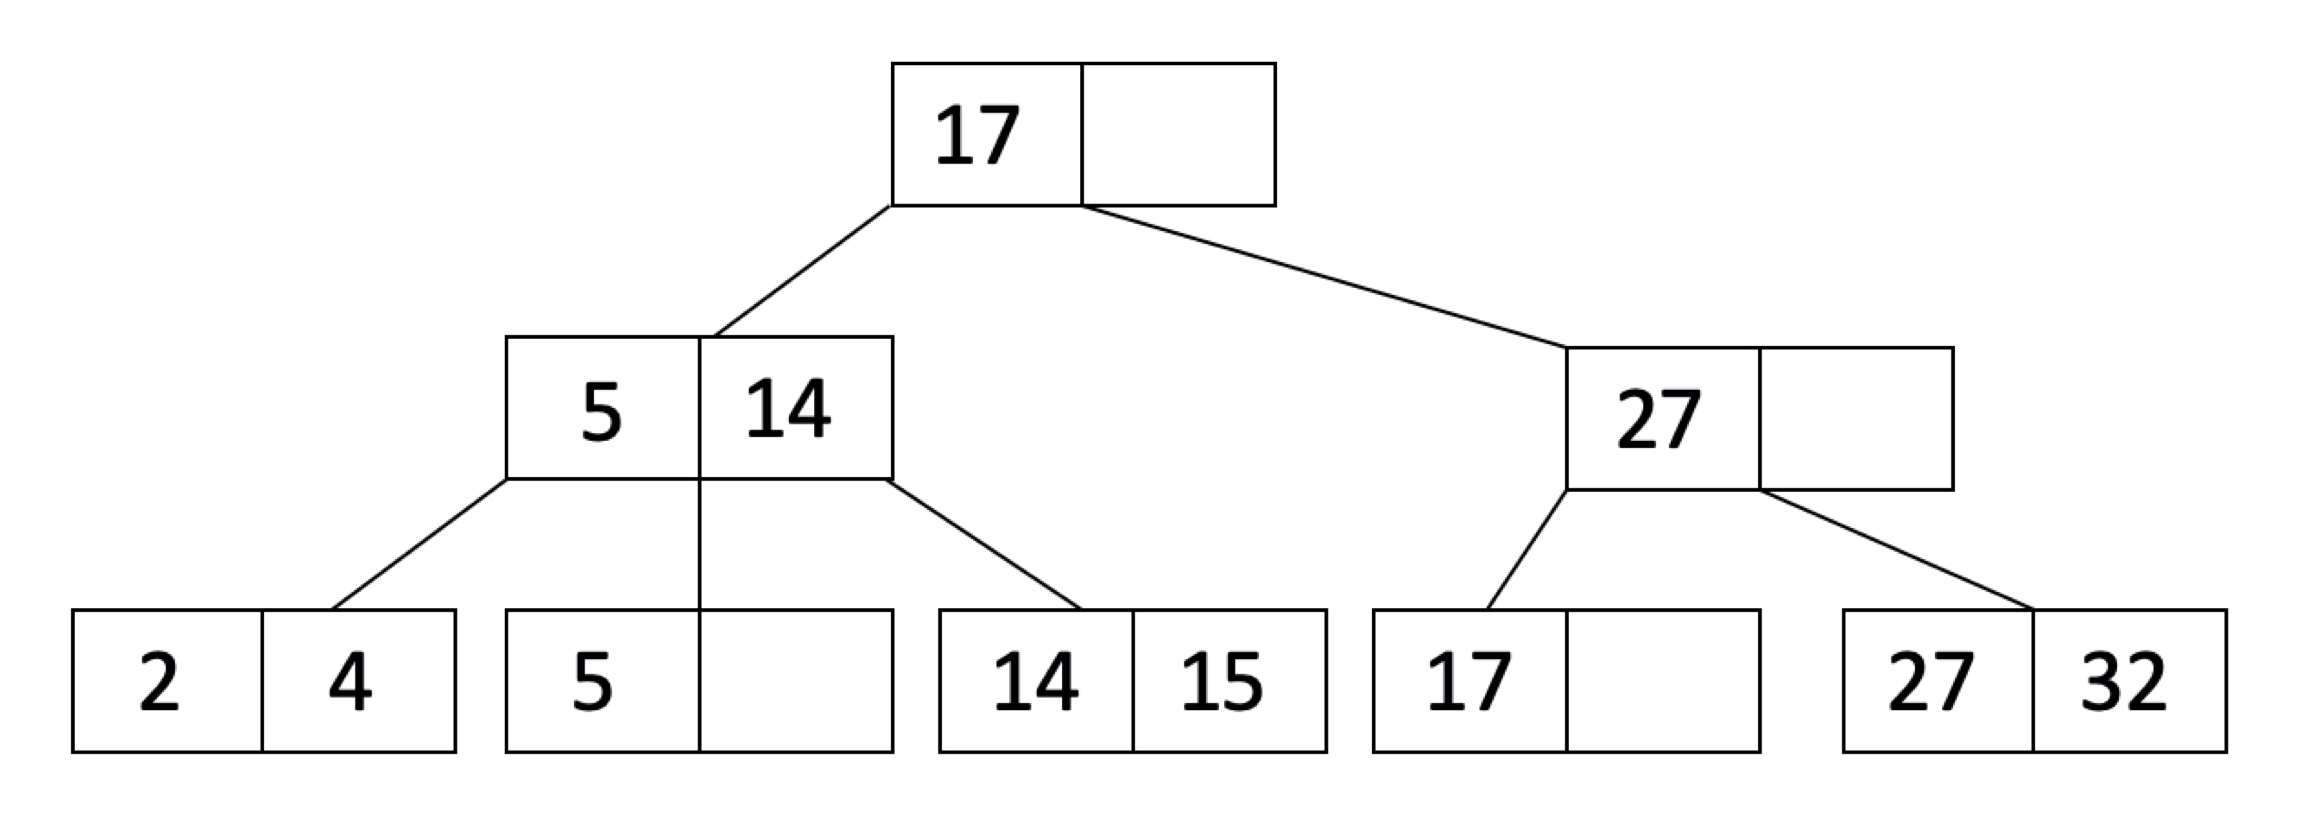 B+ tree example